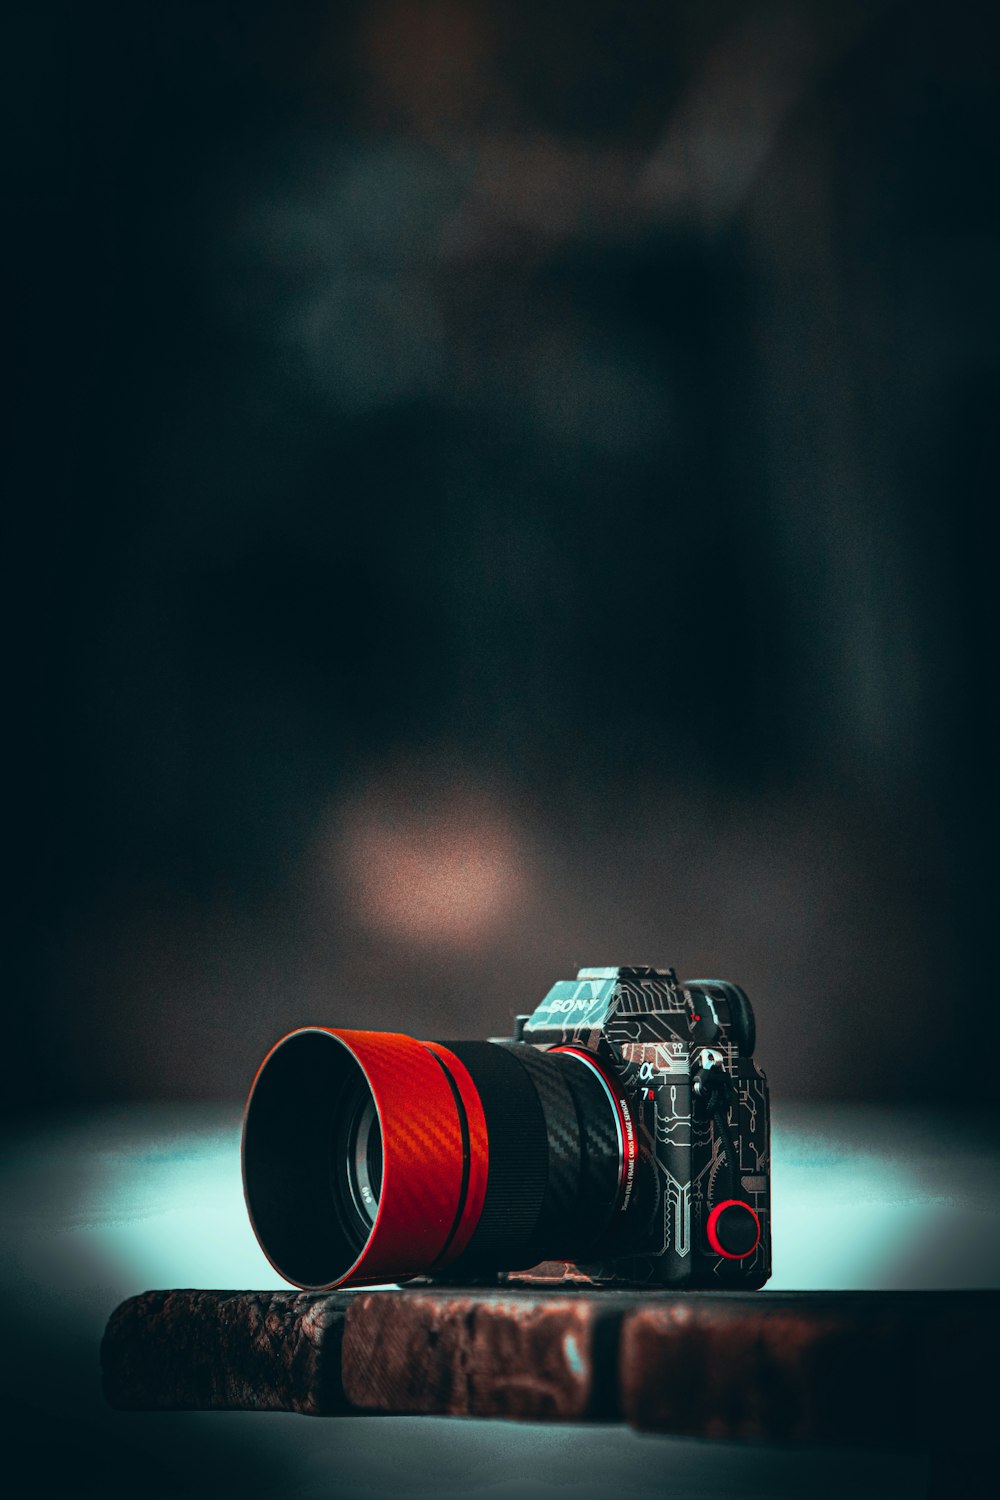 Fotocamera DSLR nera e rossa